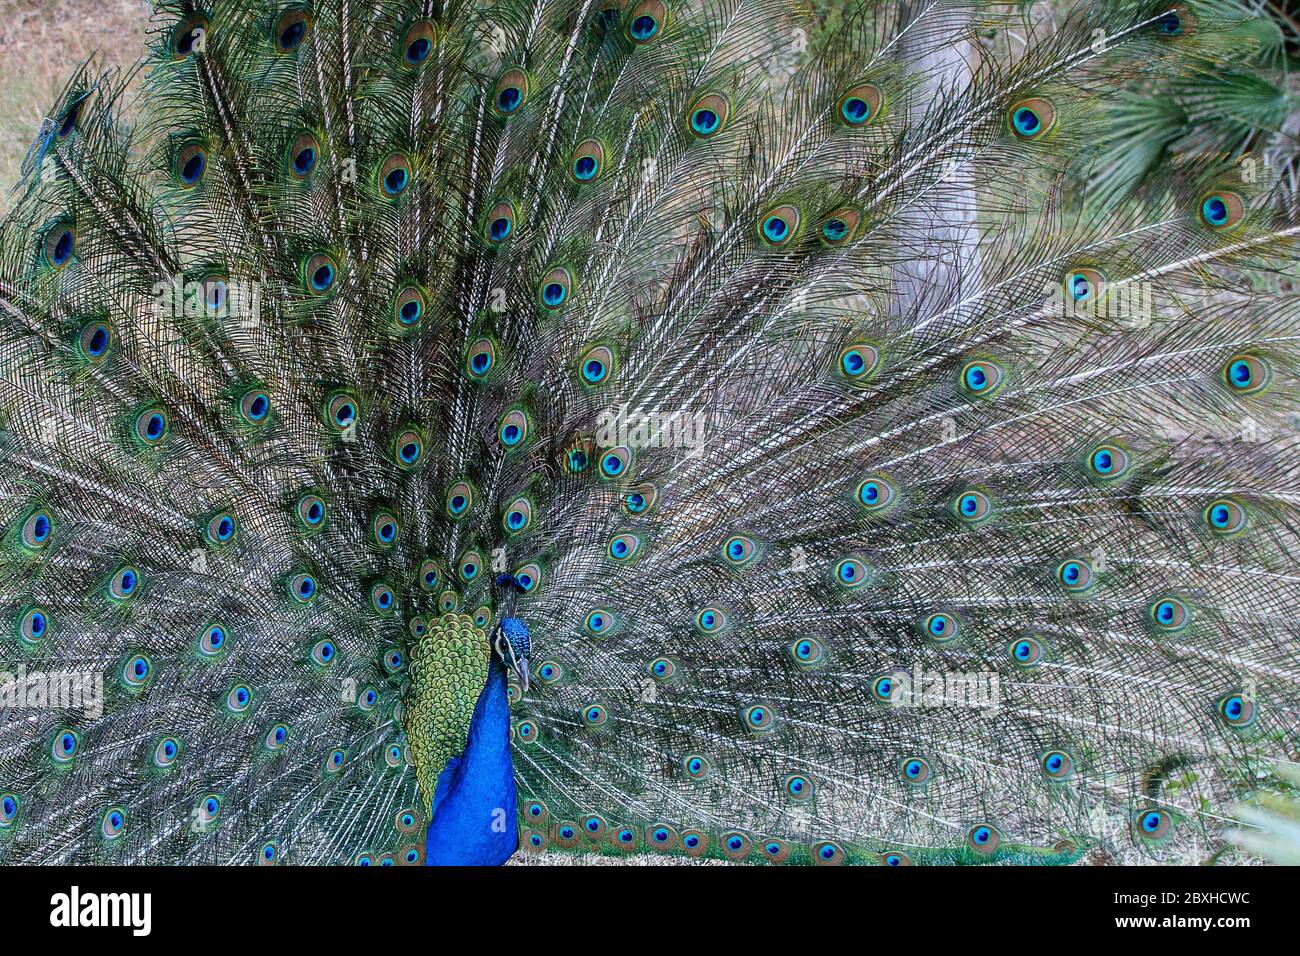 Wild bird peacock, beautiful colorful tail.Wild fauna in nature concept. Stock Photo